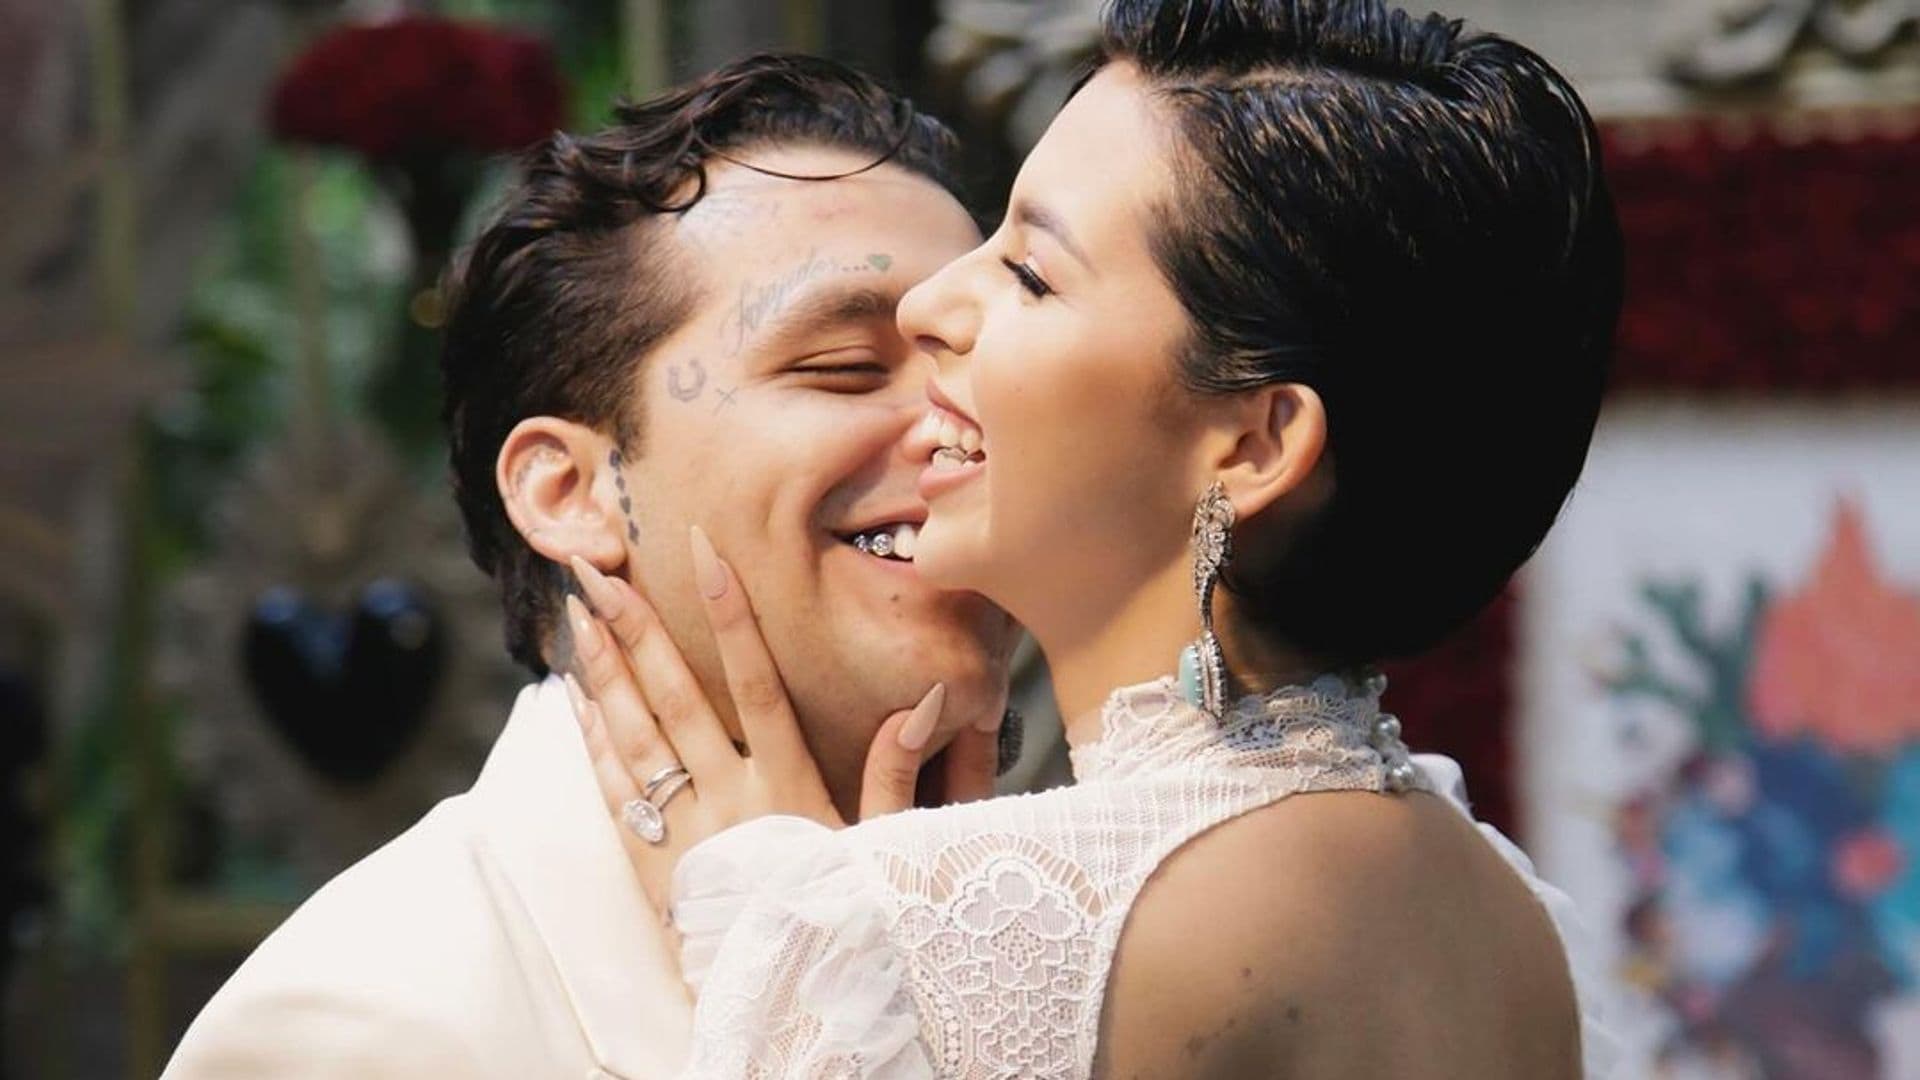 Inside Christian Nodal and Ángela Aguilar's wedding: photos and details